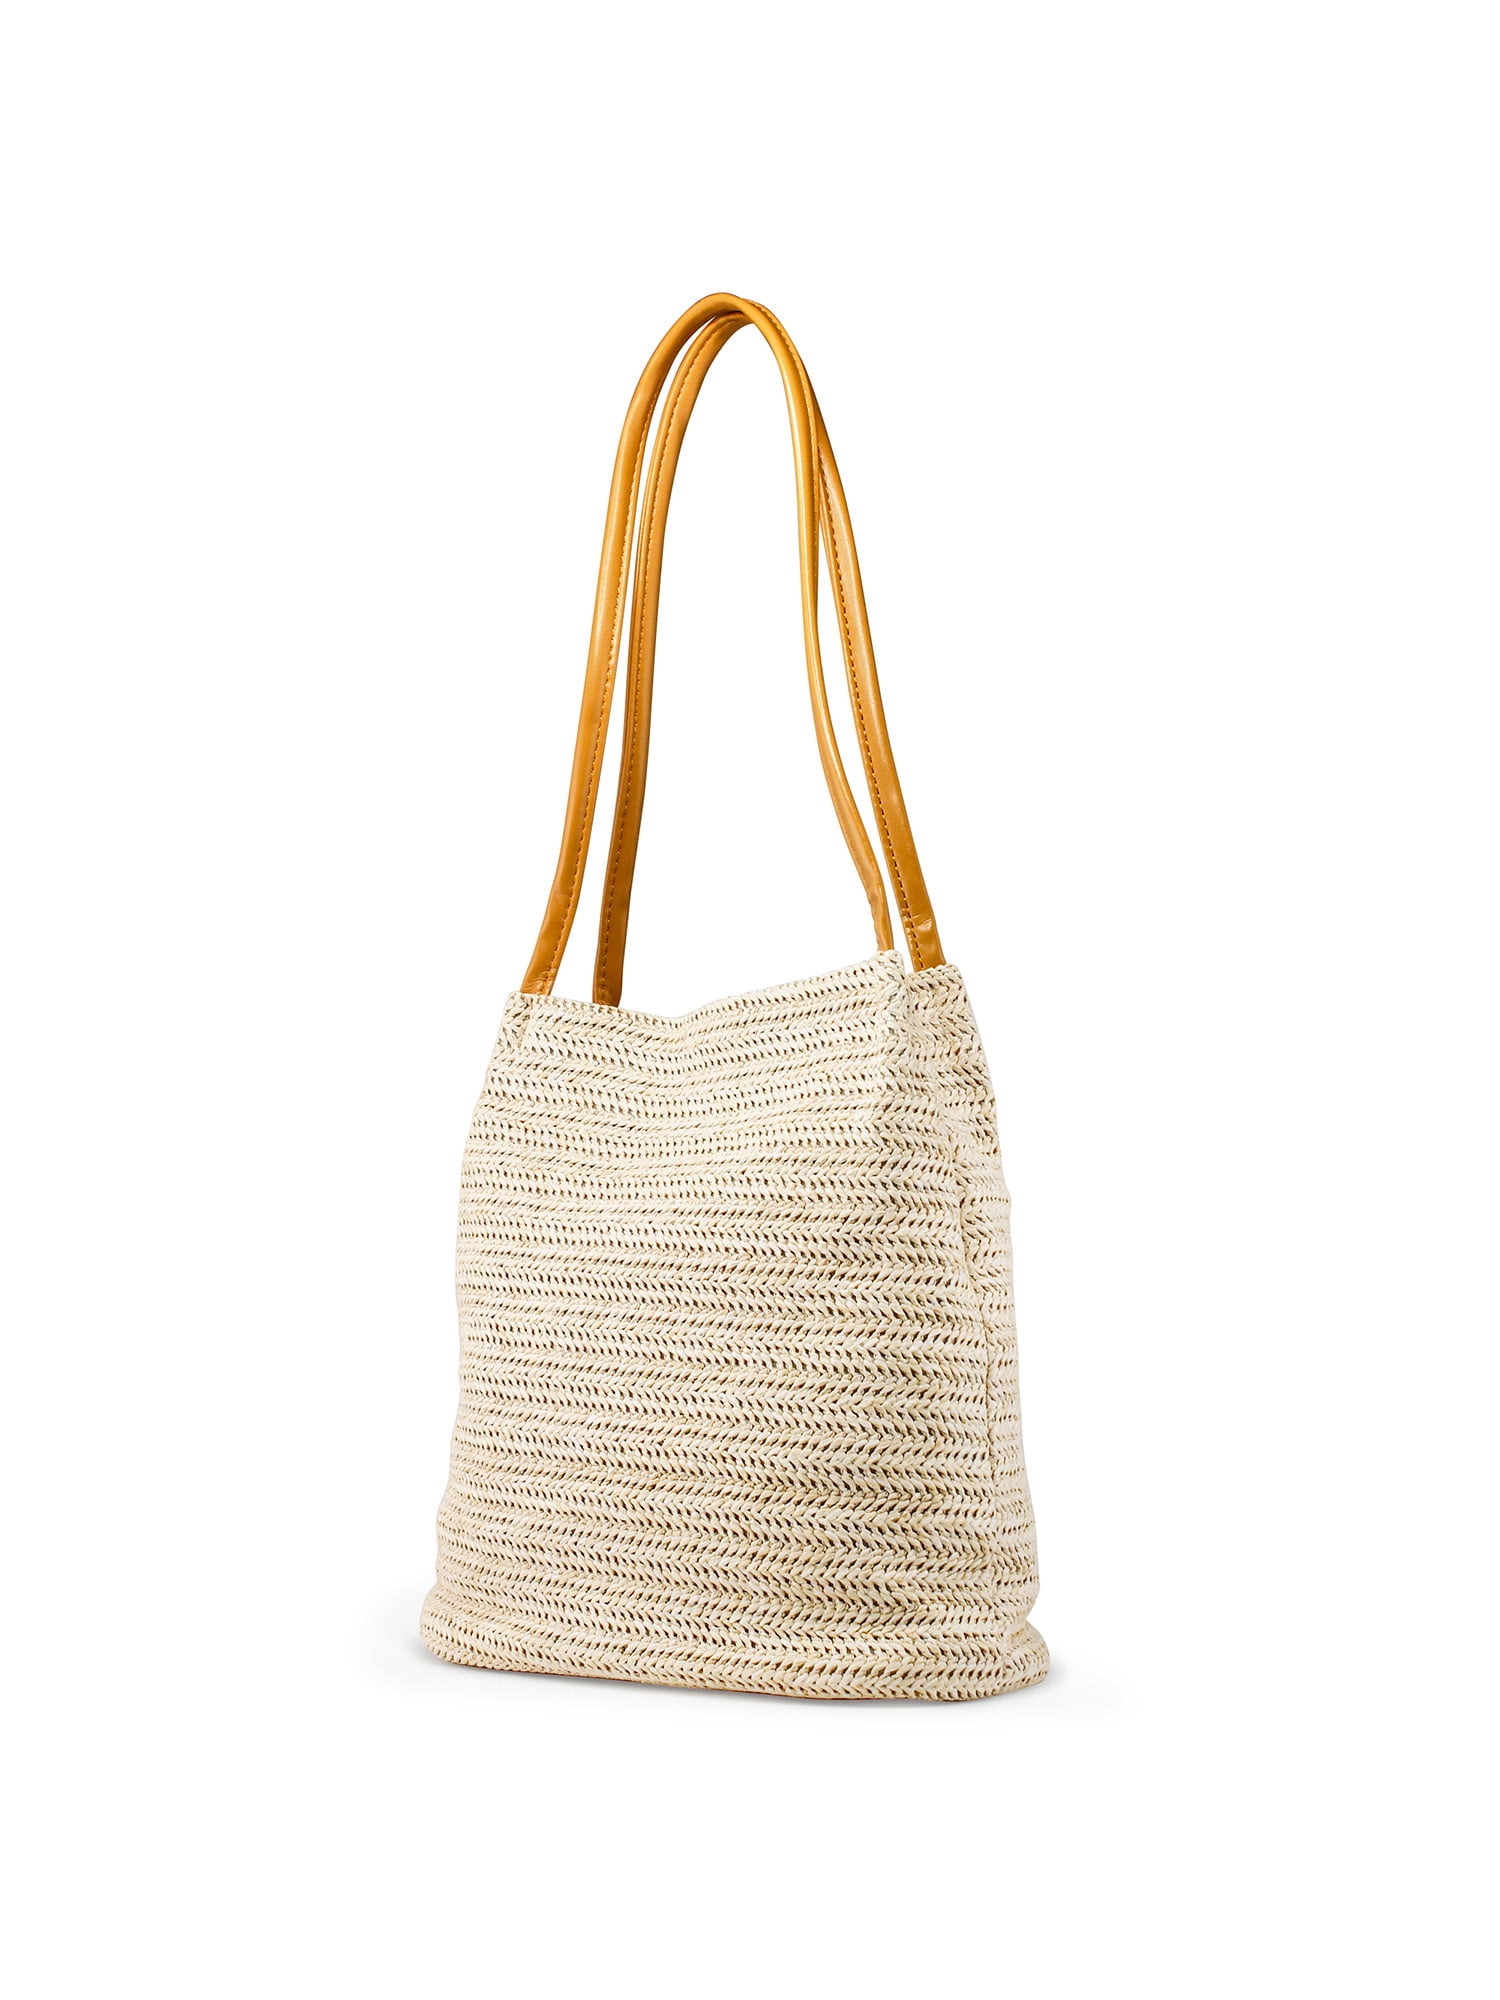 Gearonic - OCT17 Women Straw Beach Bag tote Shoulder Bag Summer Handbag ...